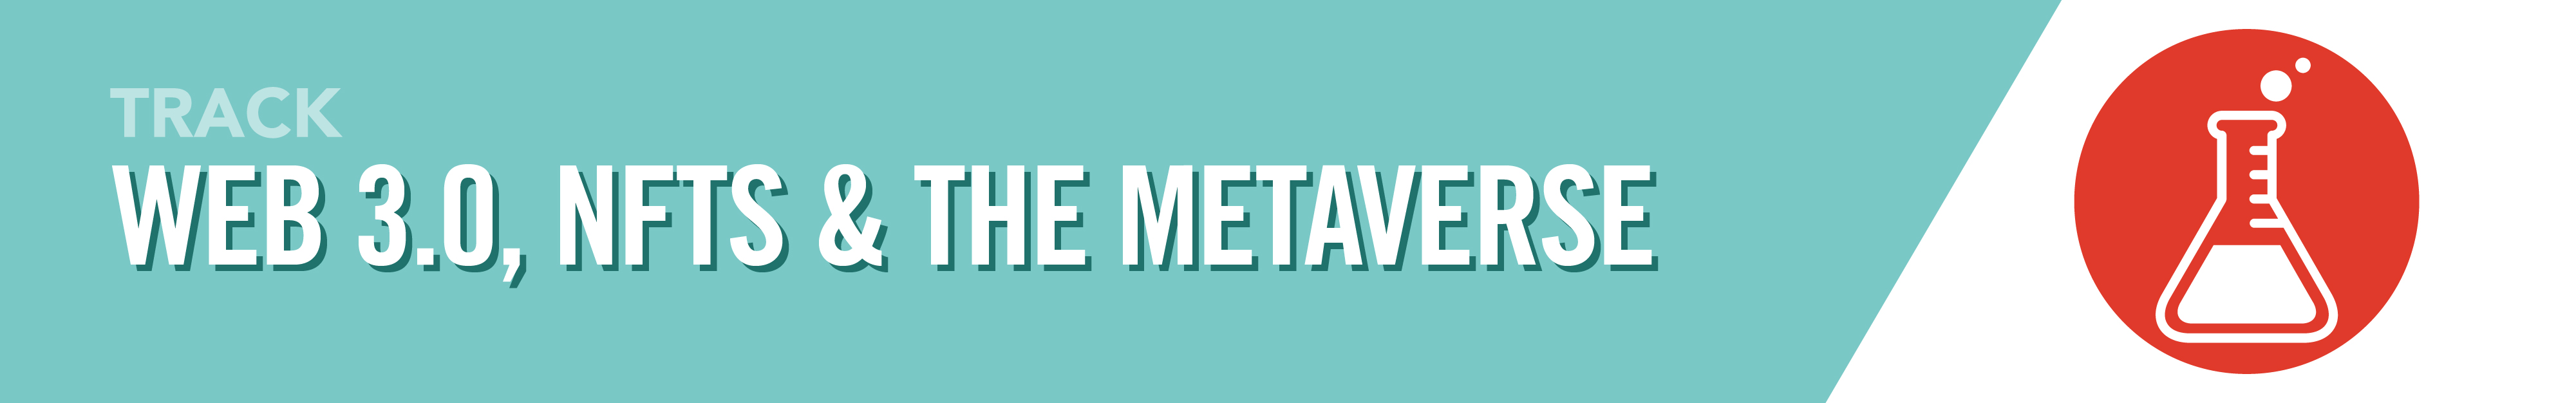 Web 3.0, NFTs, & The Metaverse